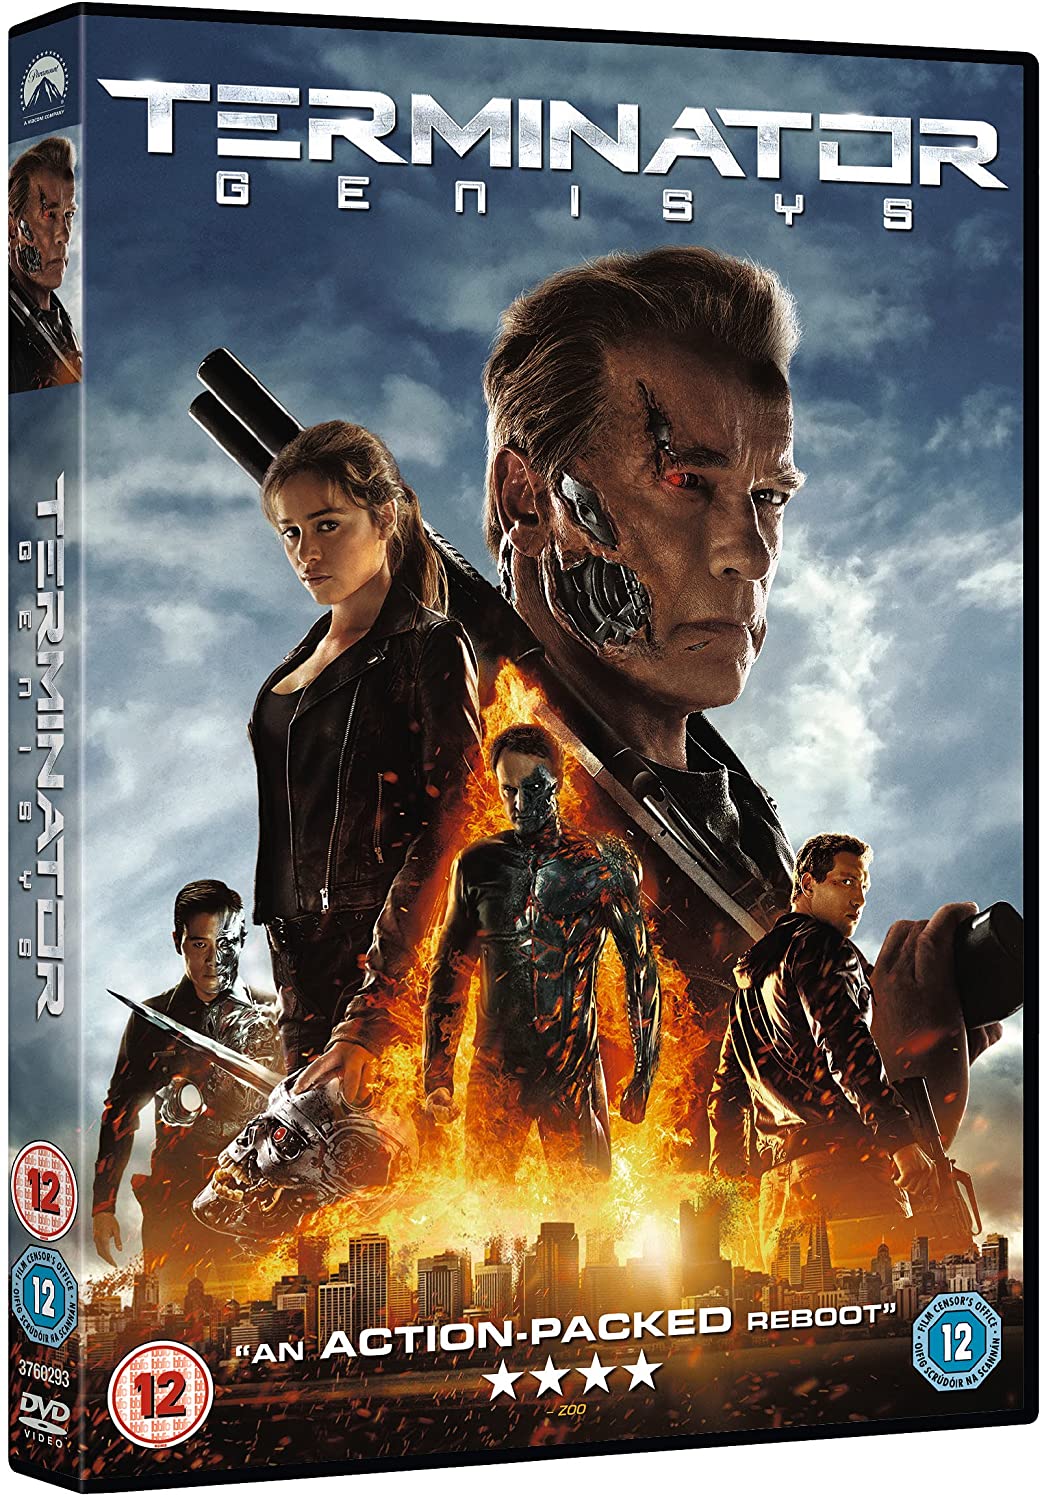 Terminator Genisys [2015] - Action/Sci-fi [DVD]